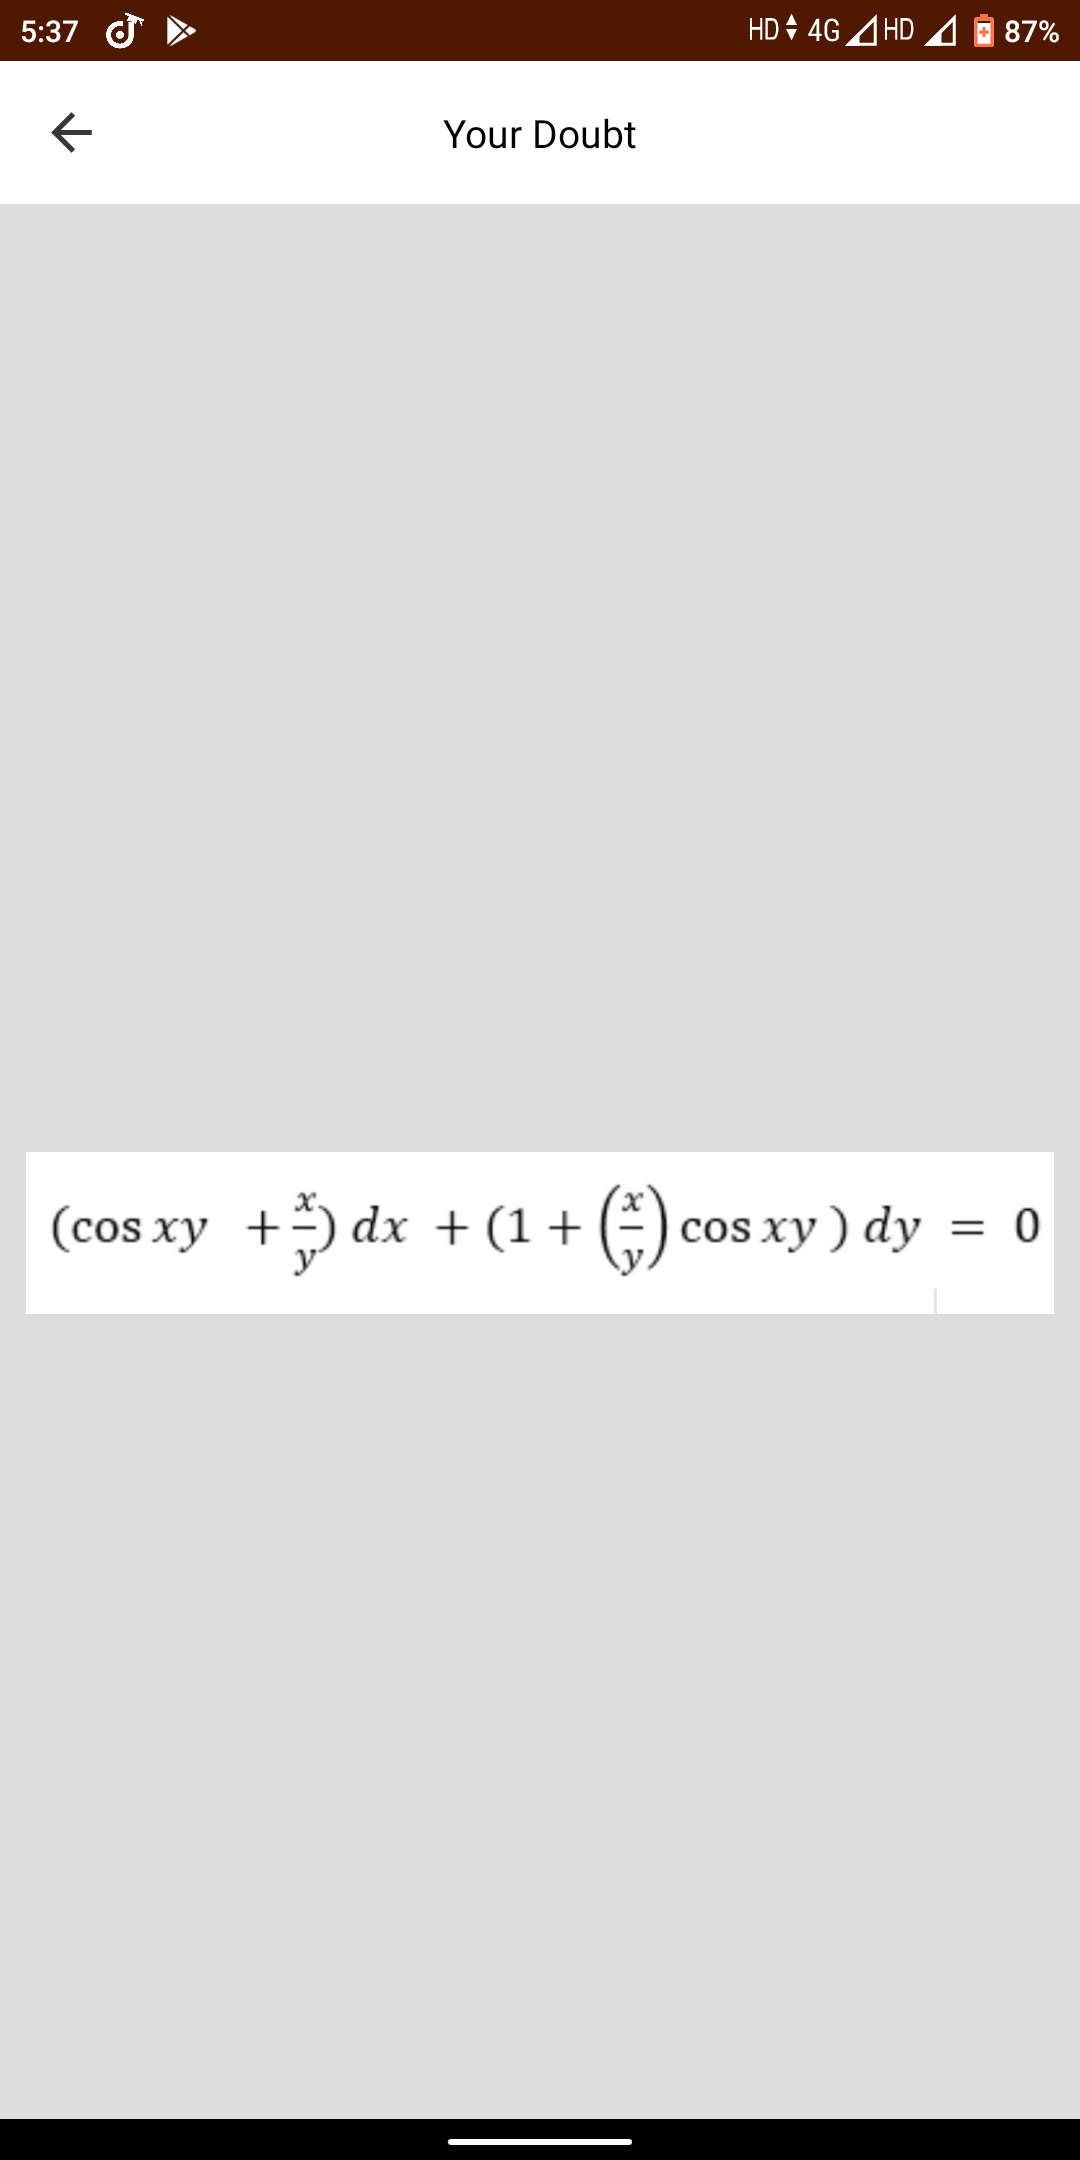 (cos xy +5
dx + (1+
cos xy ) dy = 0
ху
